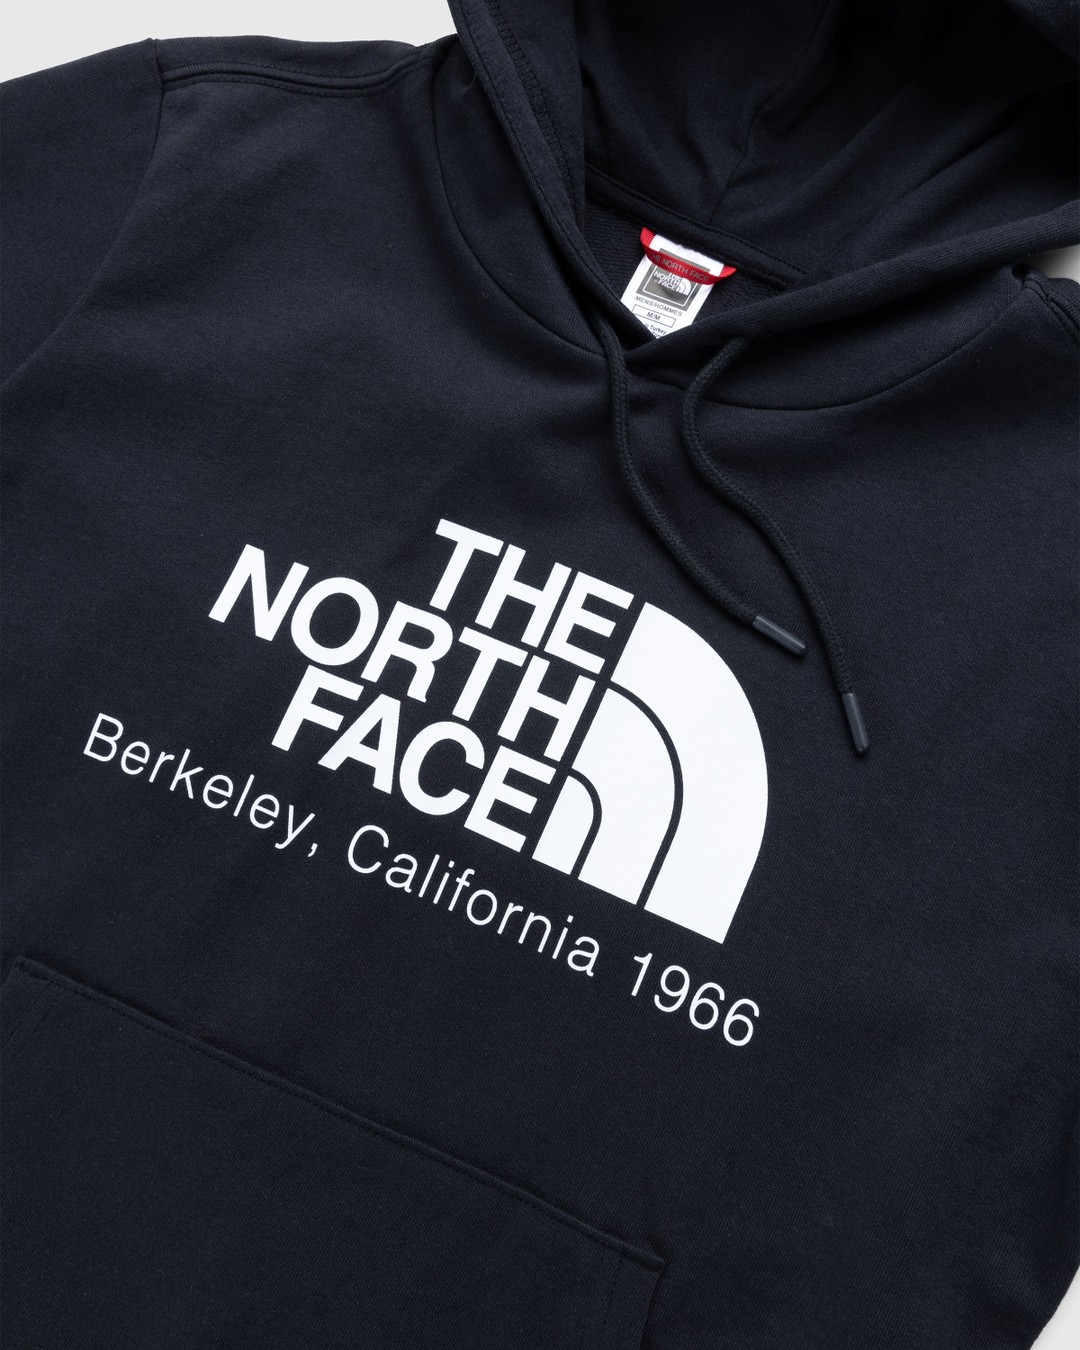 The North Face – Berkeley California Hoodie Black - Down Jackets - Black - Image 3